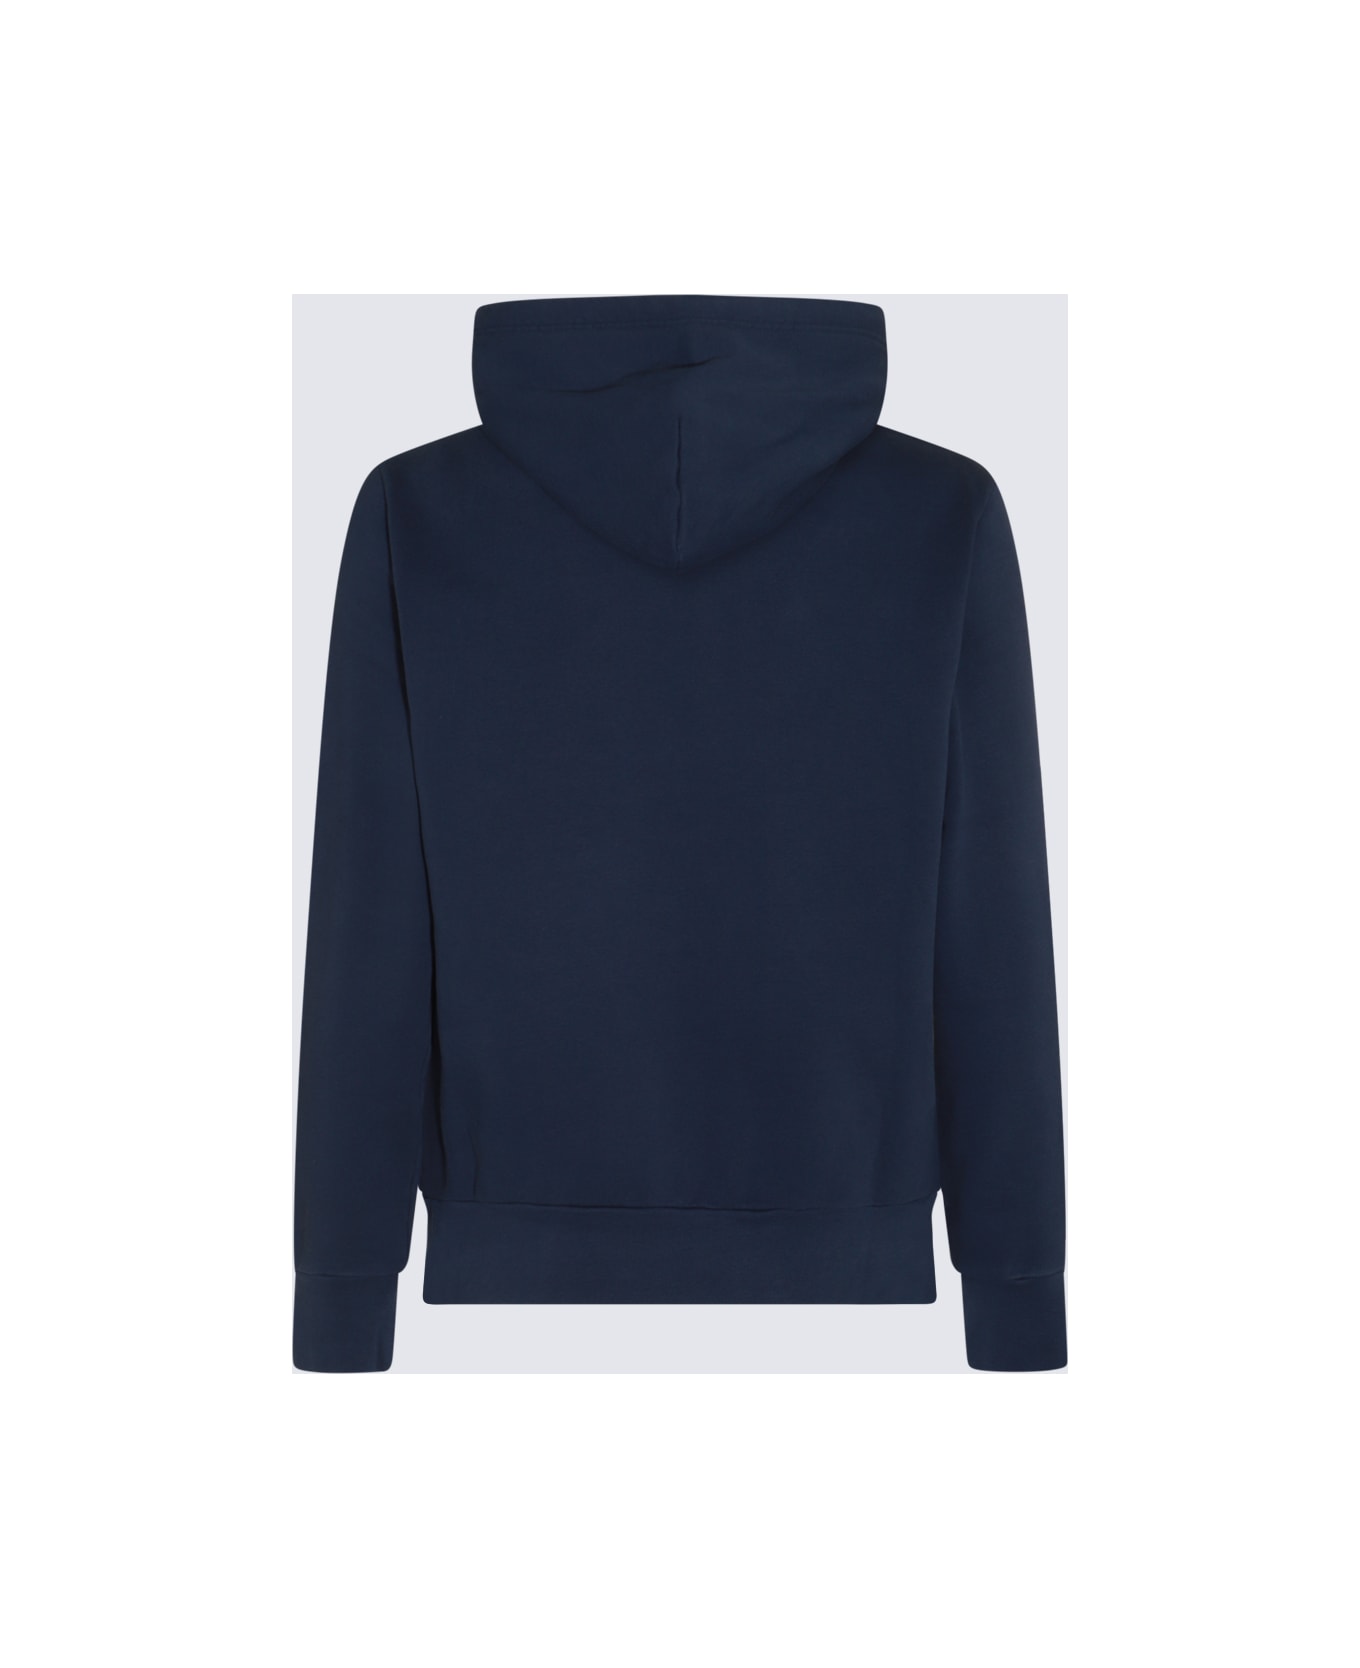 Polo Ralph Lauren Navy Blue Cotton Sweatshirt - CRUISE NAVY